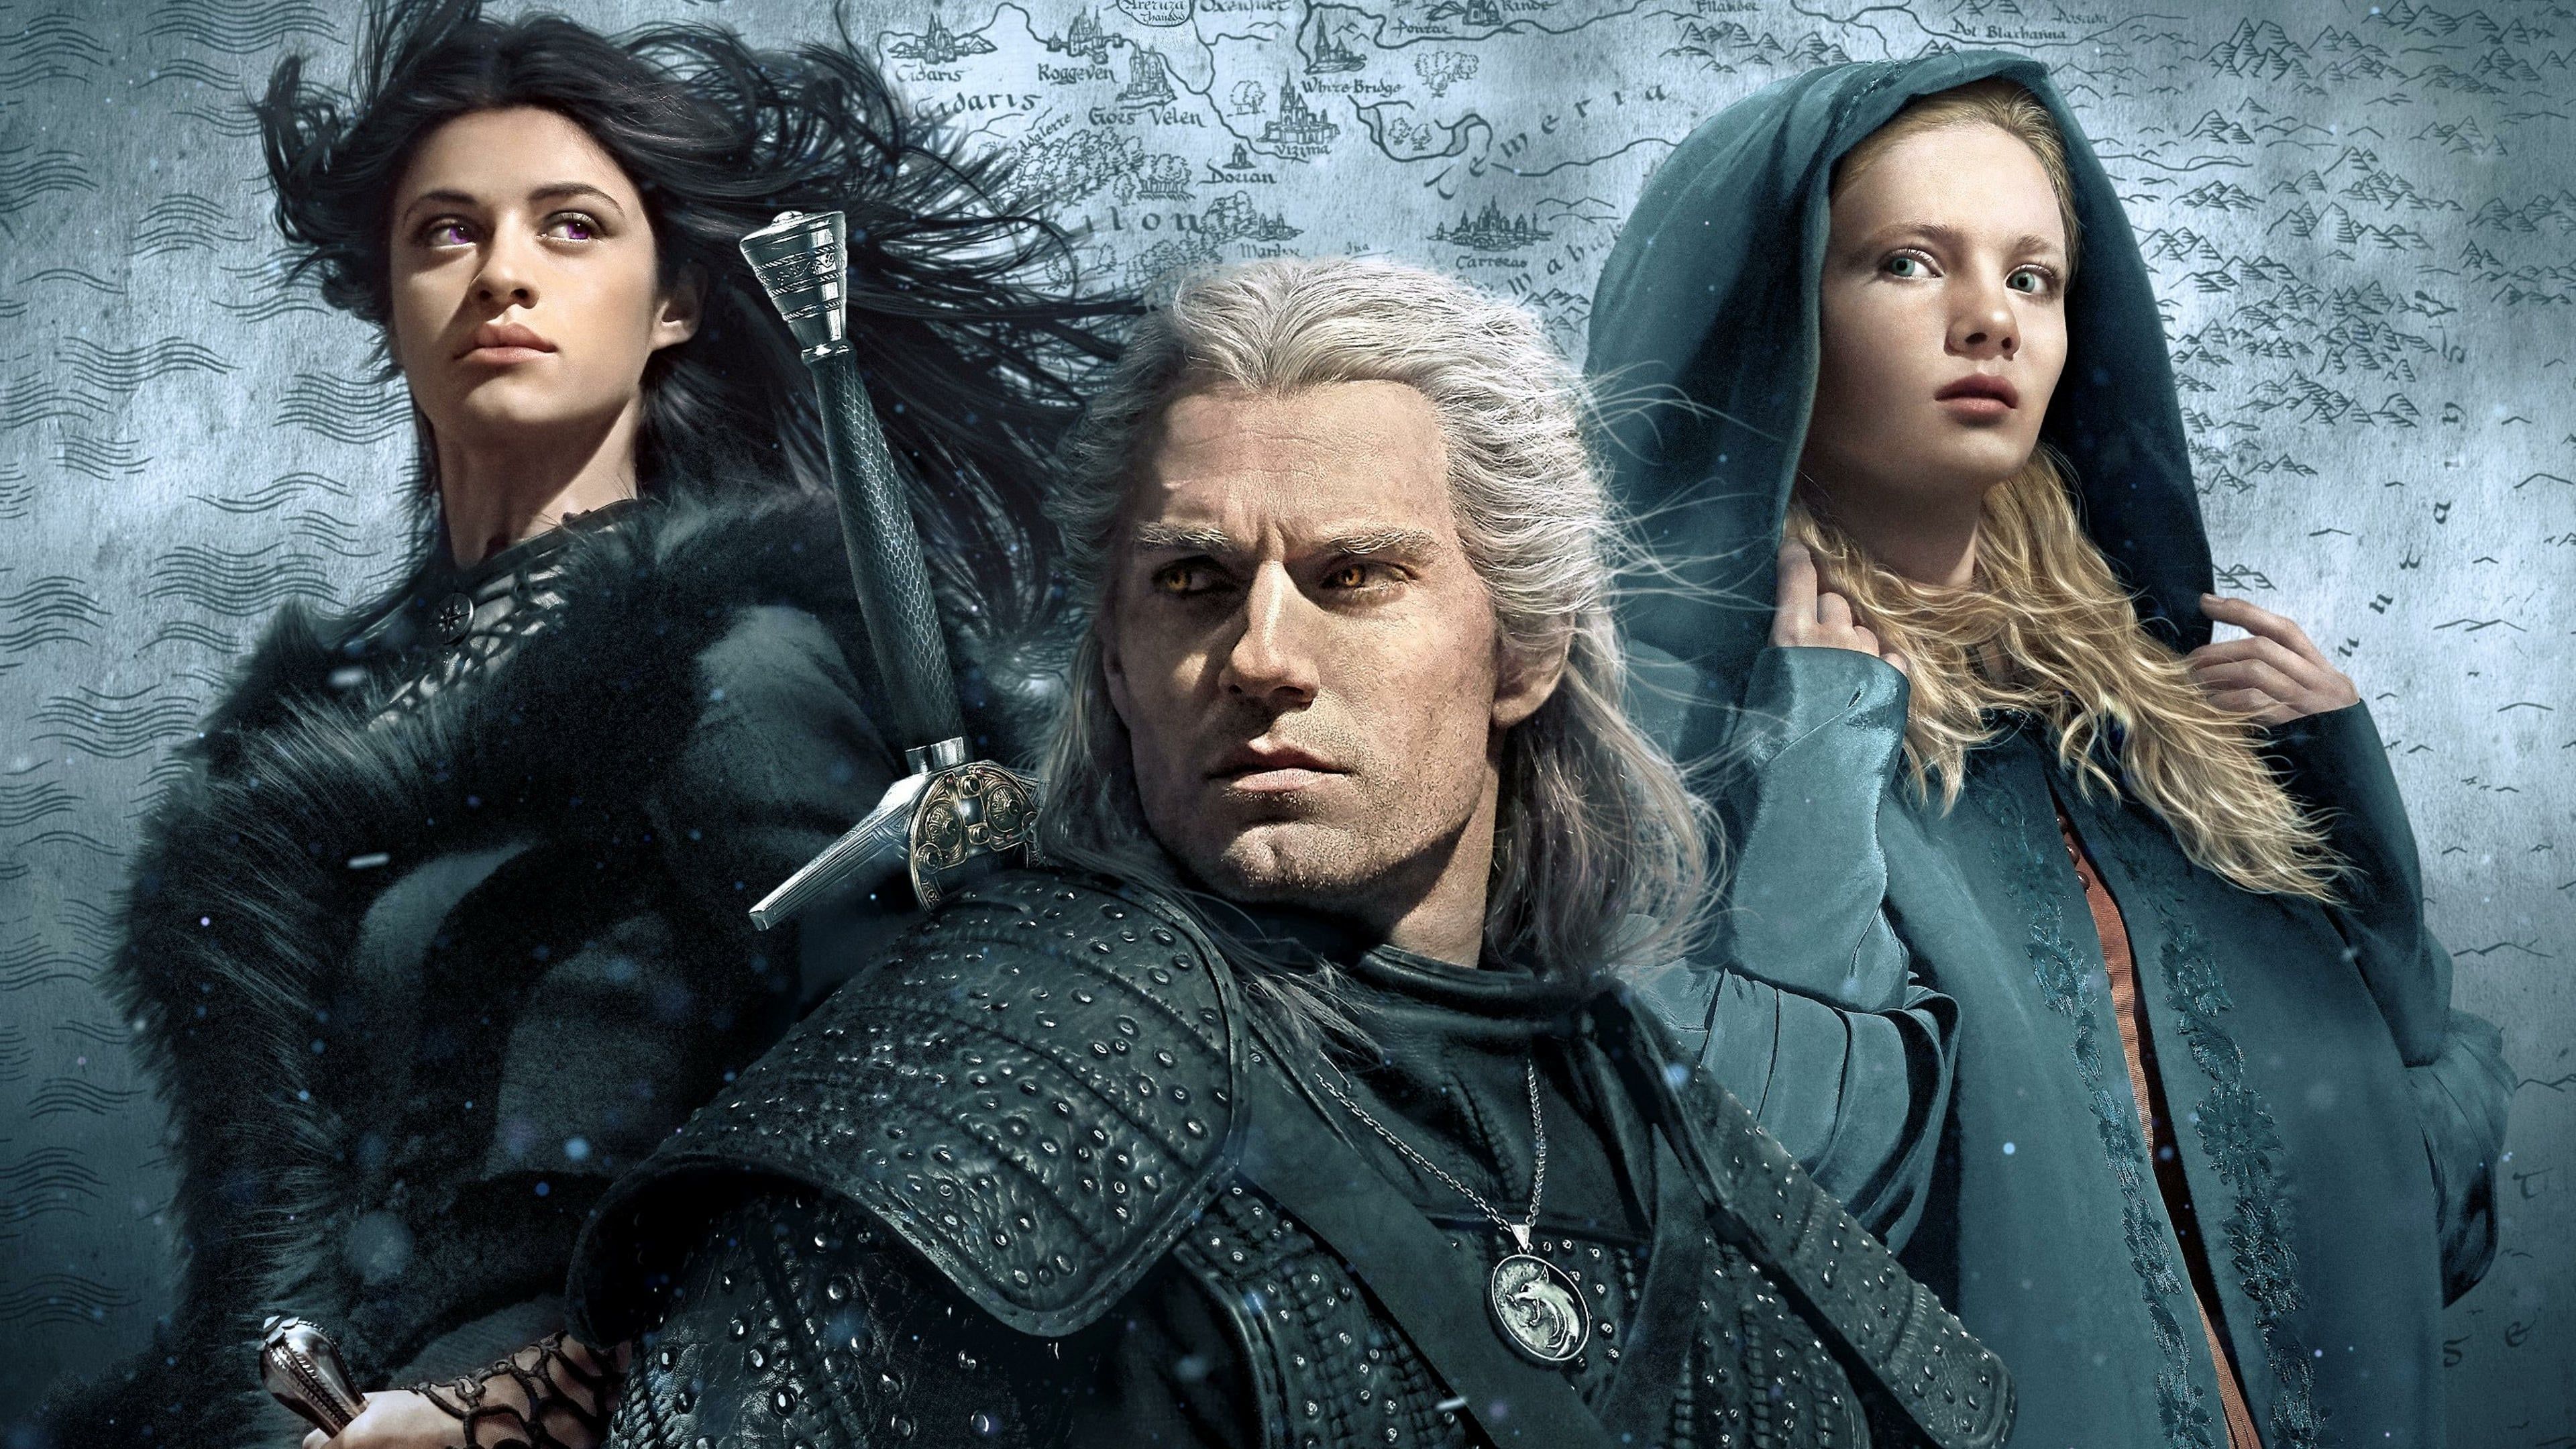 Cartel promocional de 'The Witcher', serie de Netflix basada en el videojuego homónimo.